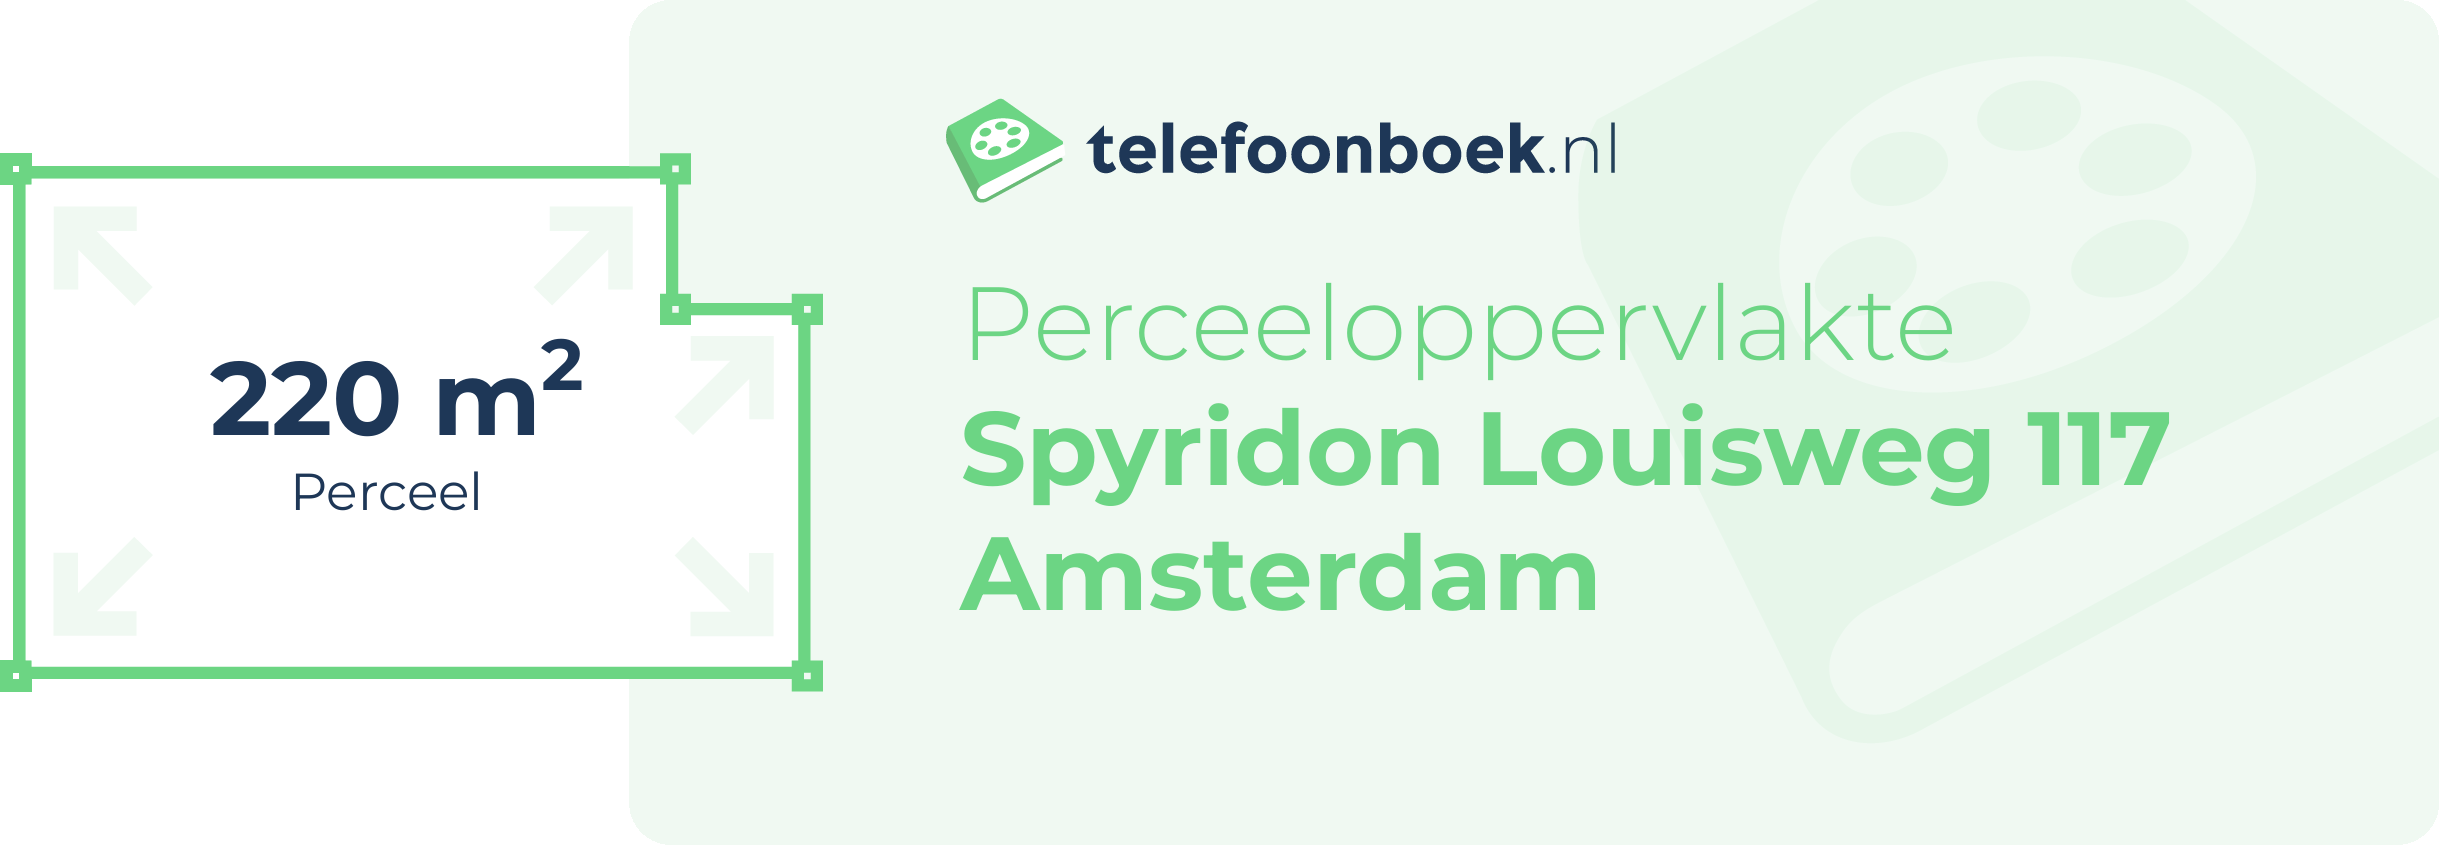 Perceeloppervlakte Spyridon Louisweg 117 Amsterdam